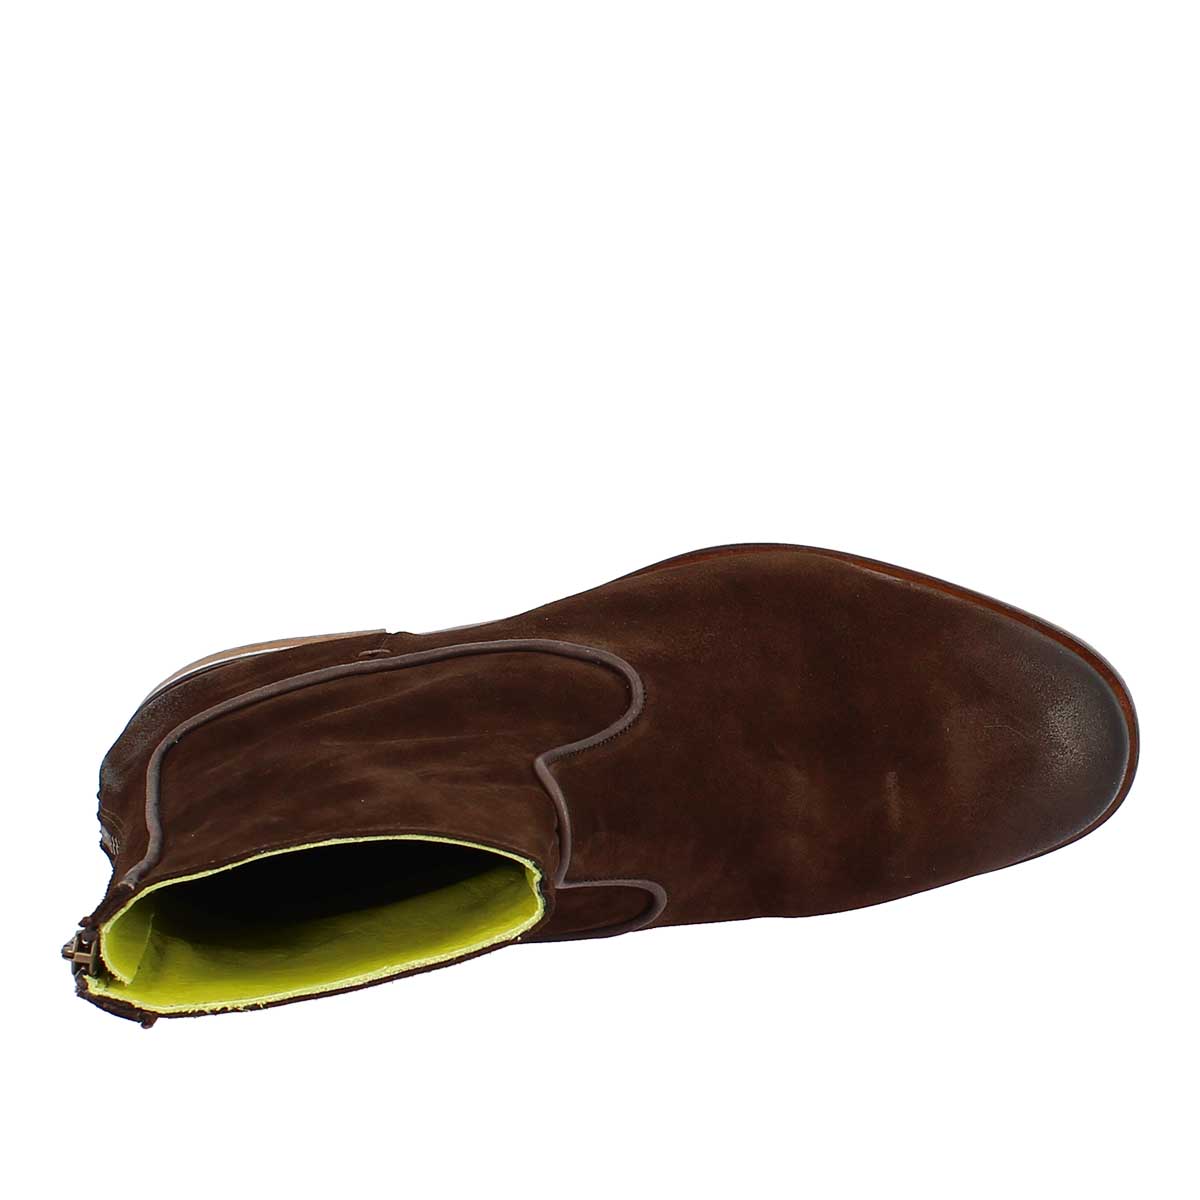 Men's ankle boot in dark brown suede with back zip